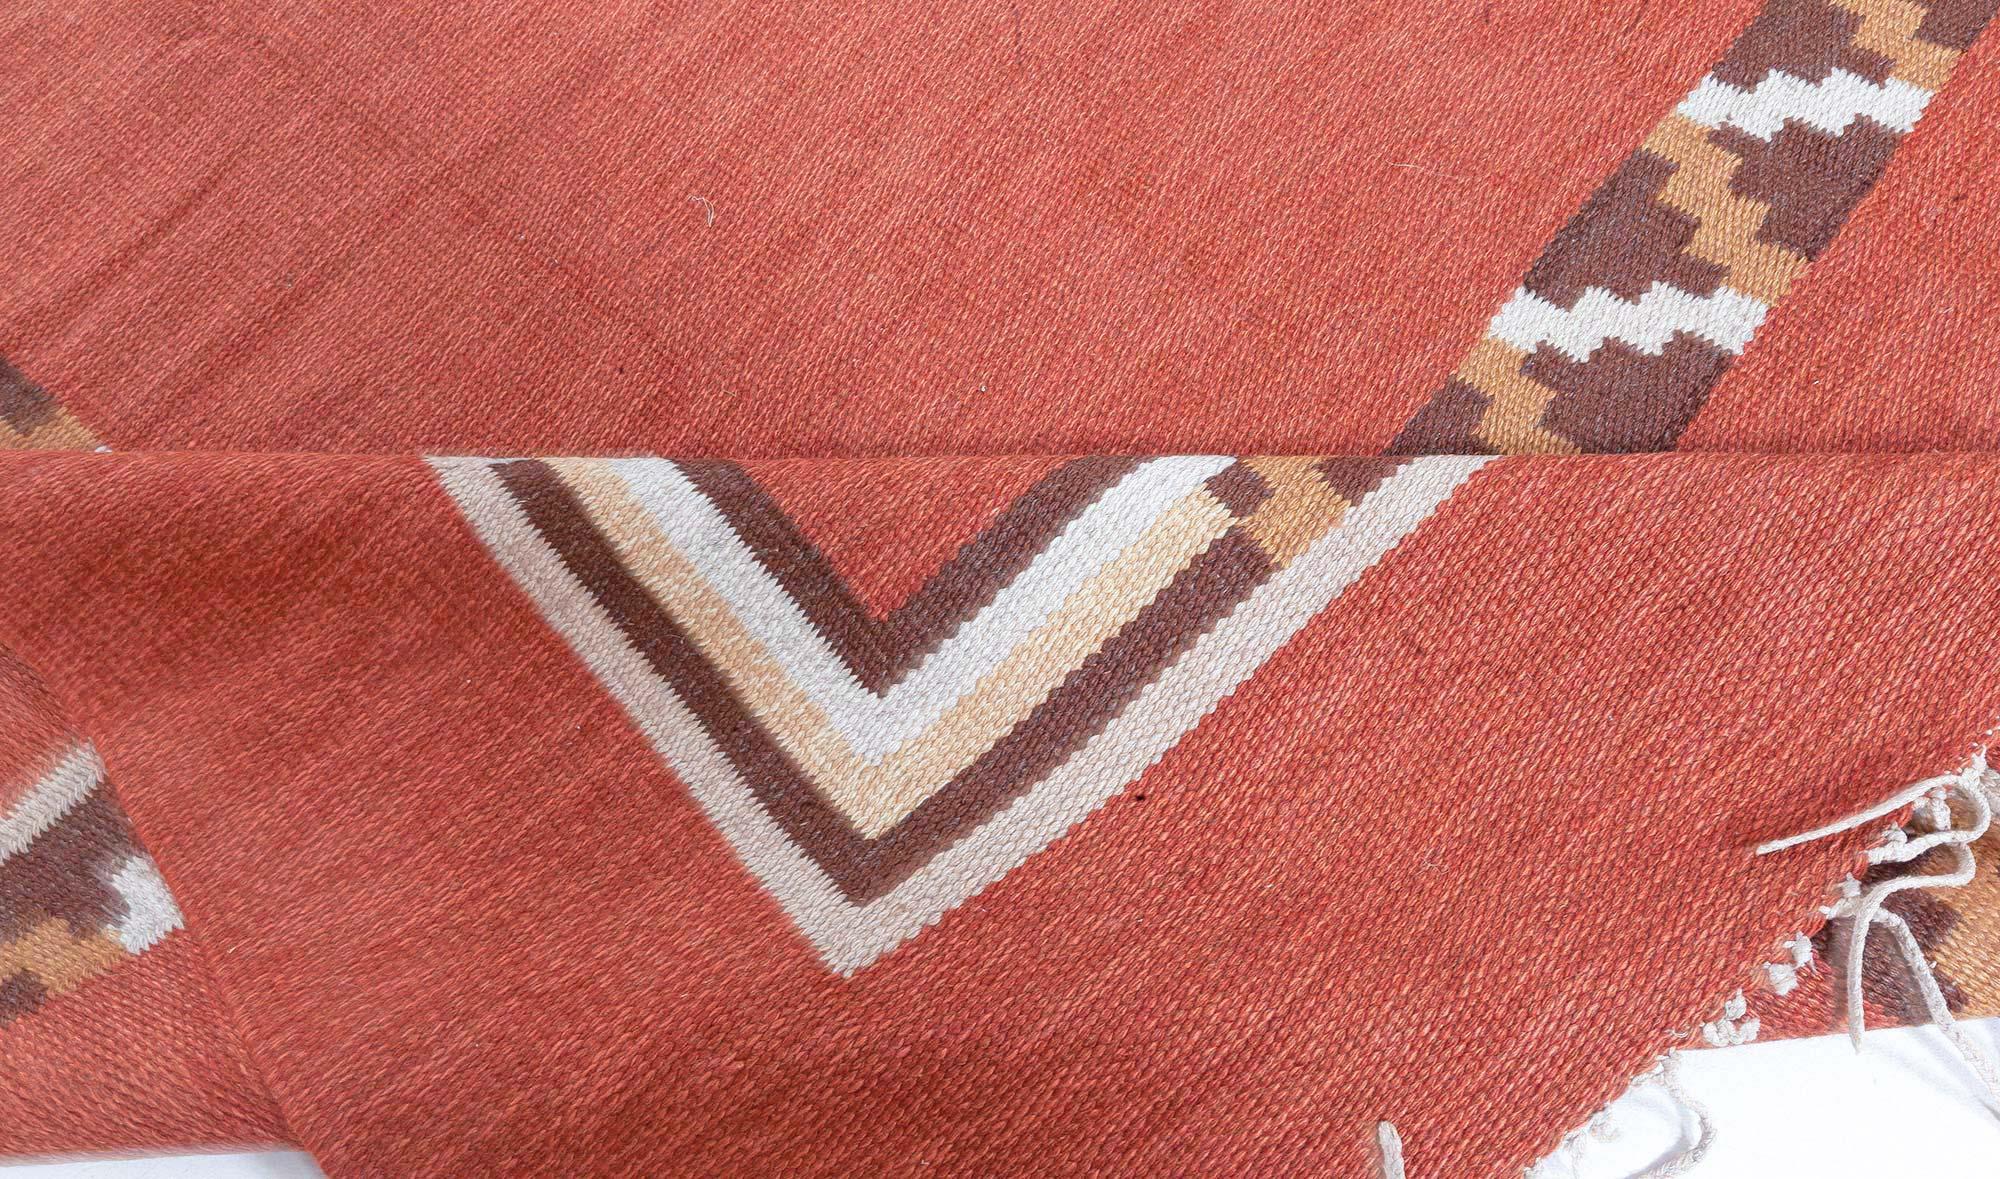 Art Deco Swedish flat weave rug.
Size: 8'0